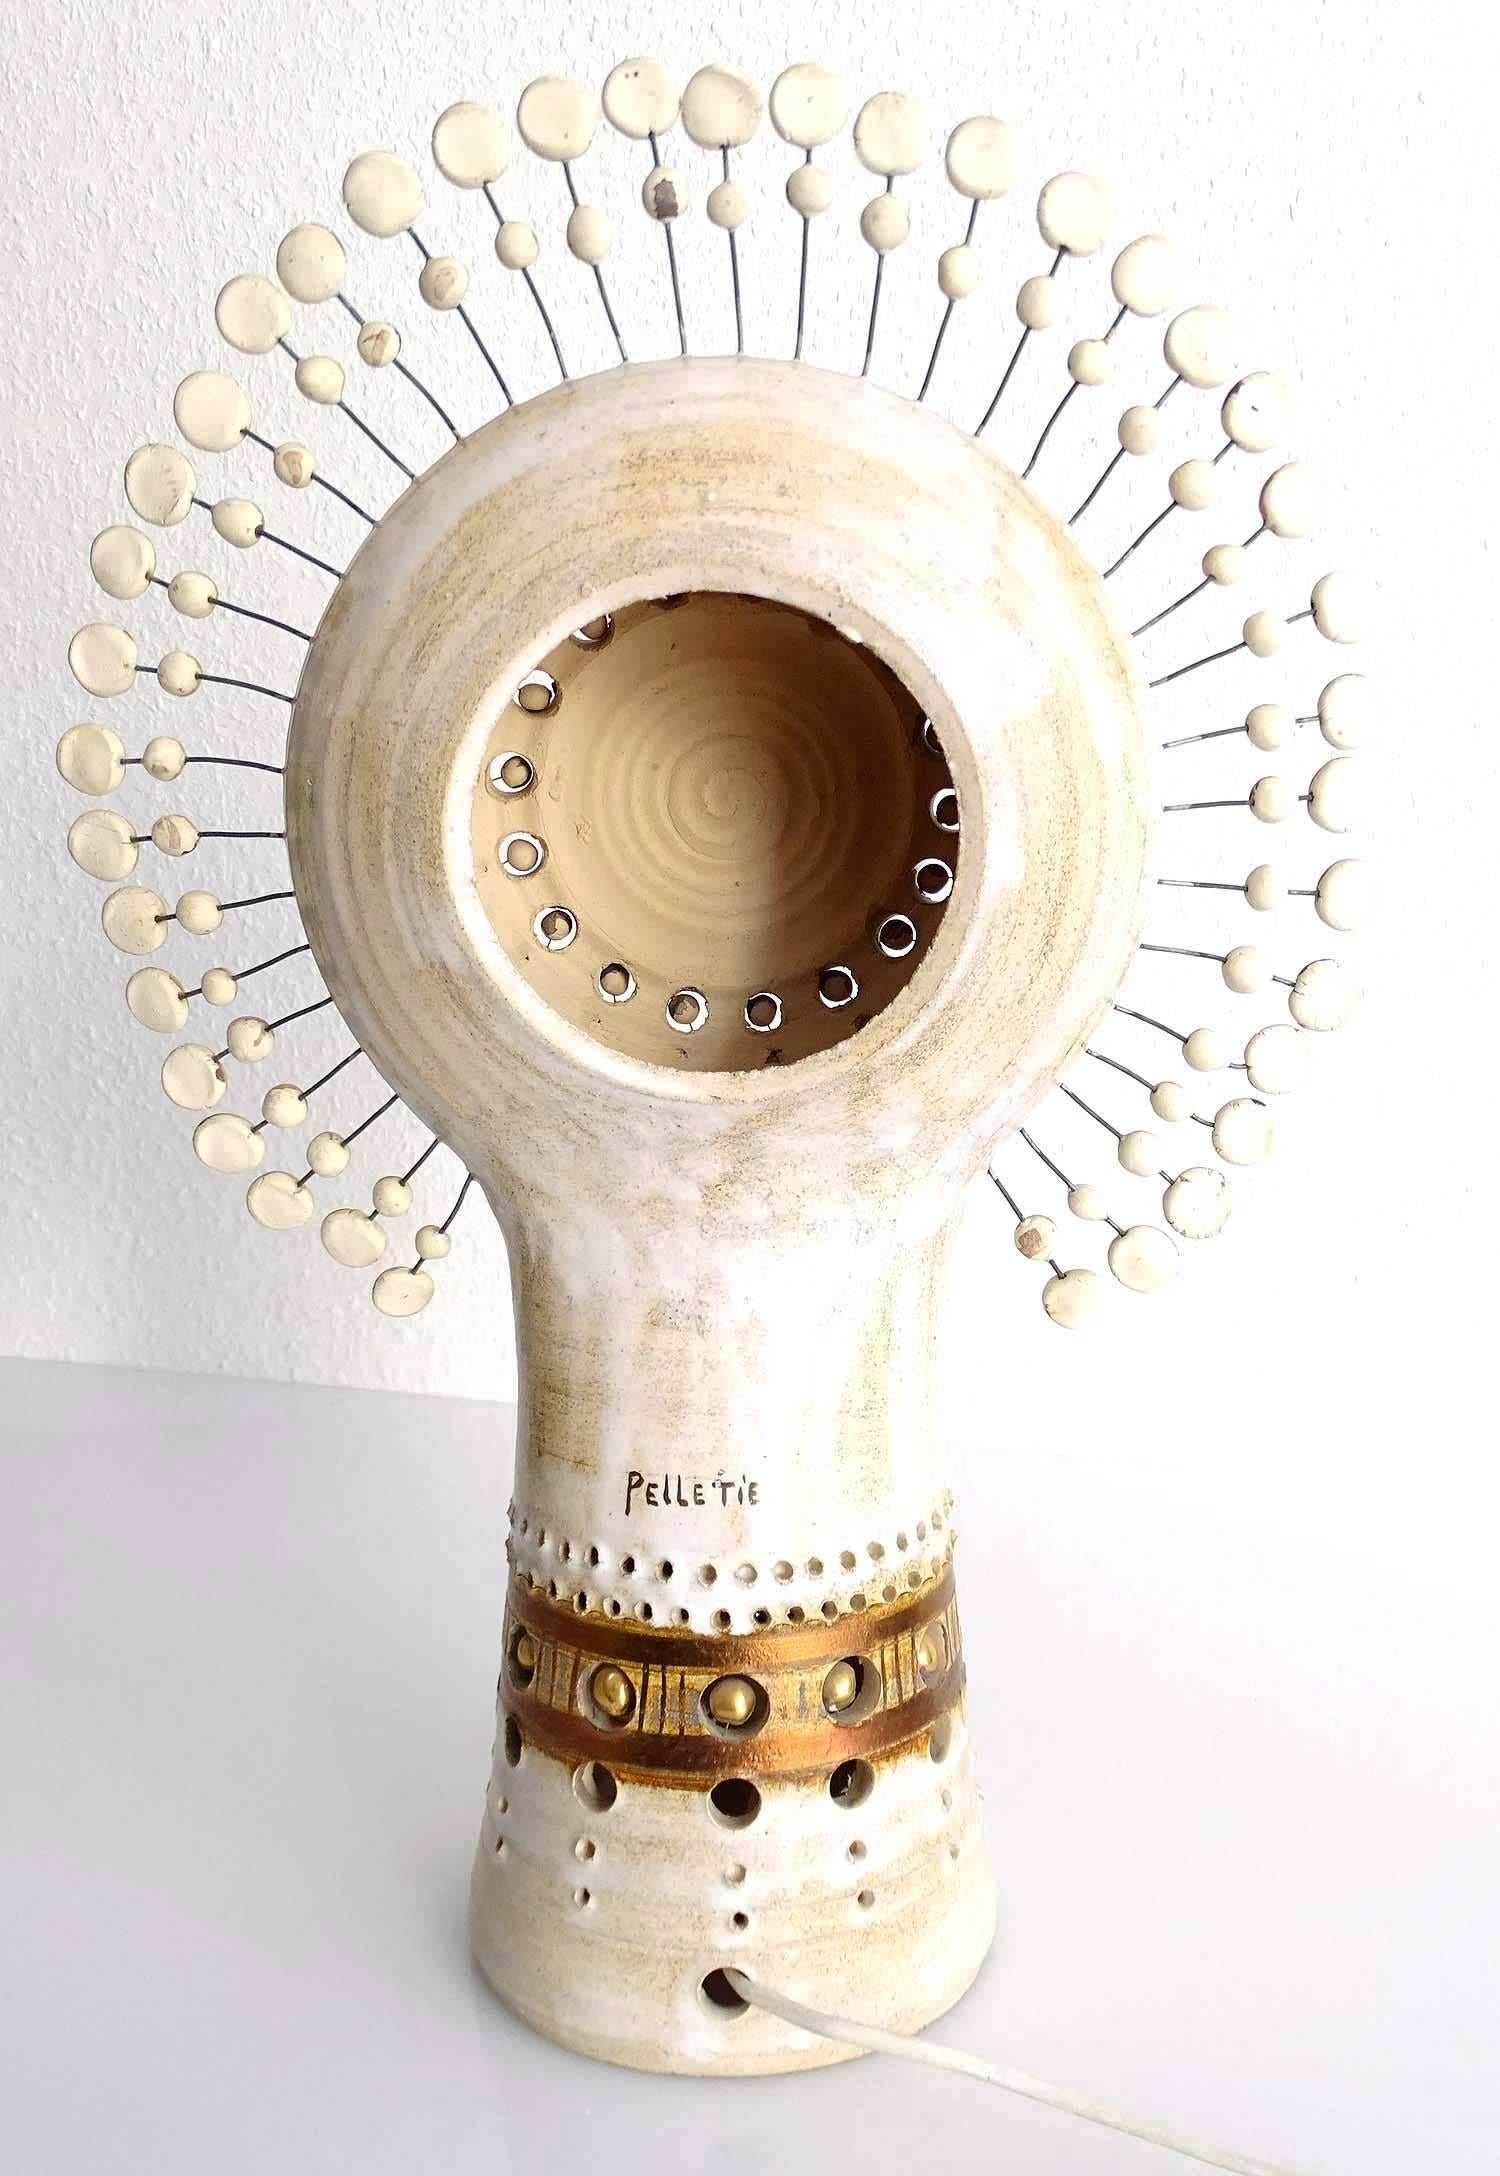  French Sunburst Georges Pelletier Ceramic Table Lamp, Stilnovo Gio Ponti Era  15